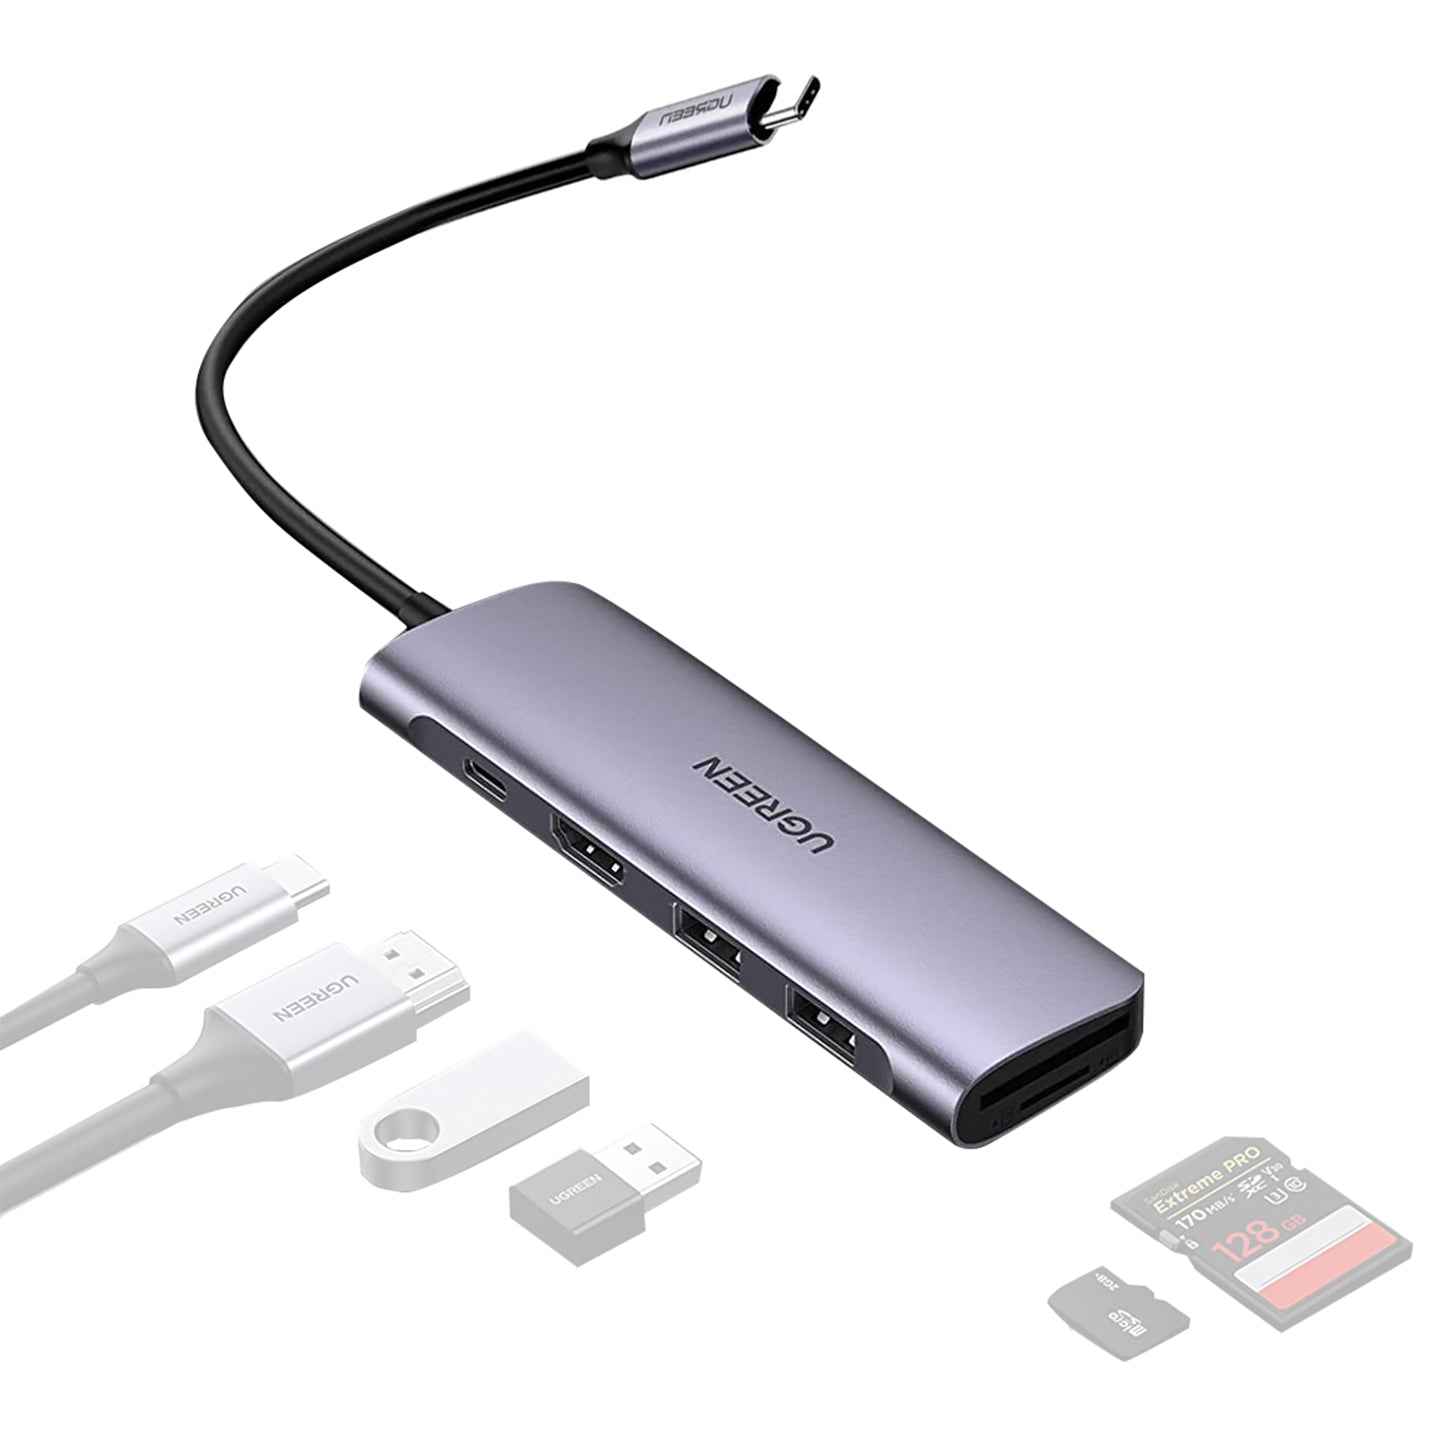 Ugreen 6-in-1 4K HDMI USB C Hub